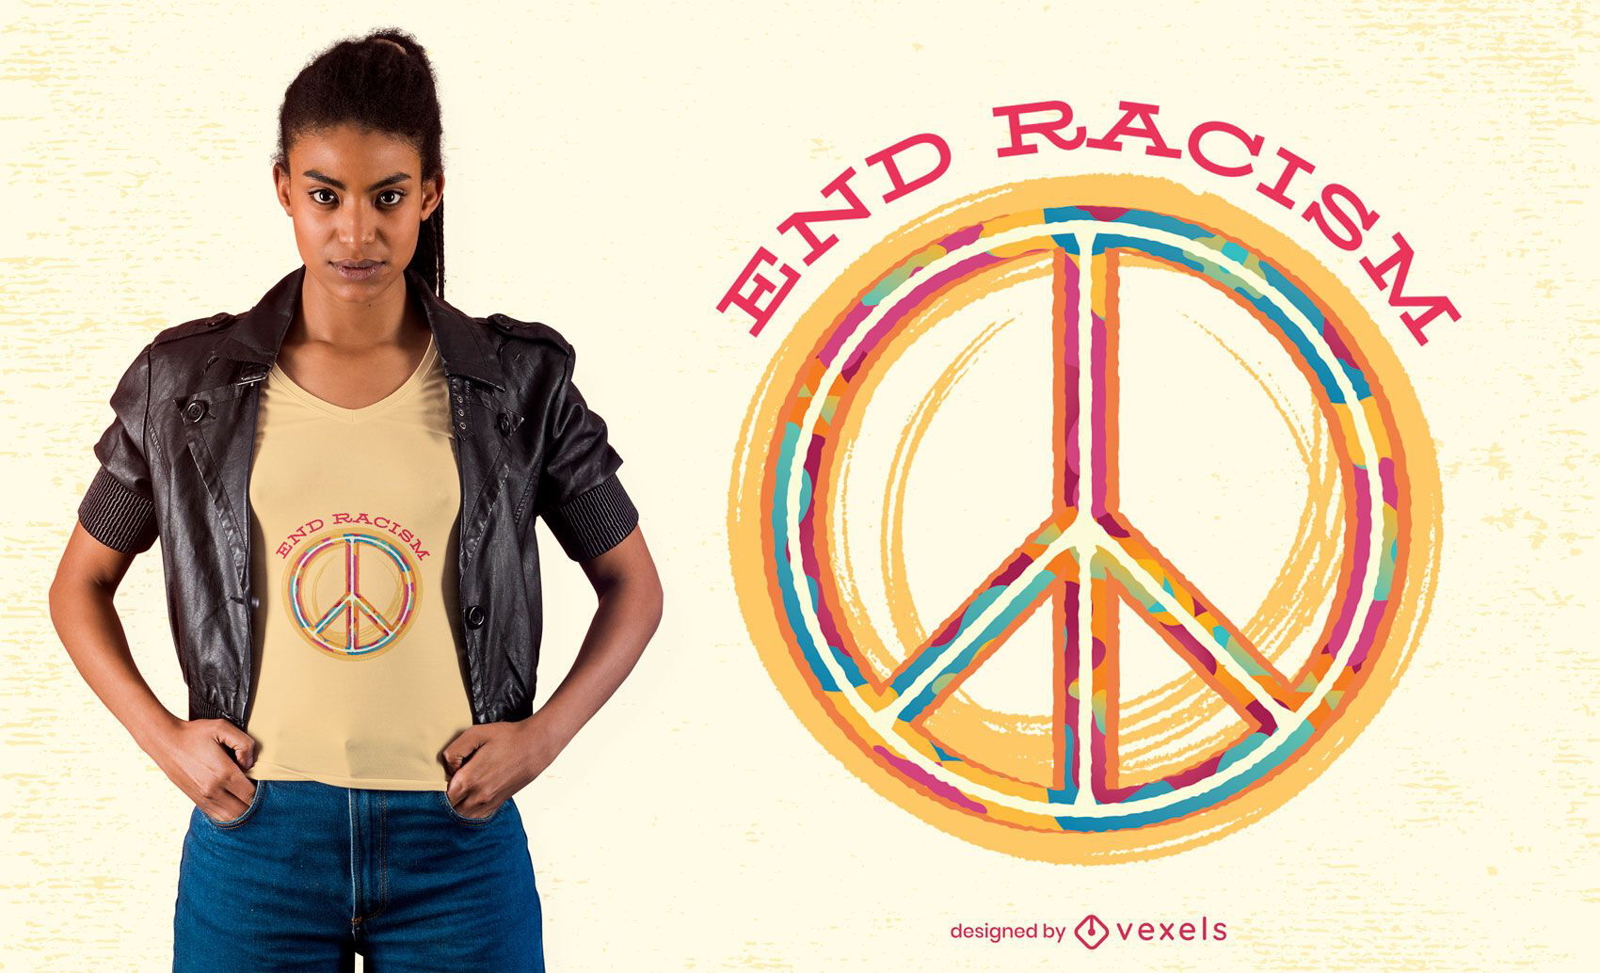 End racism t-shirt design